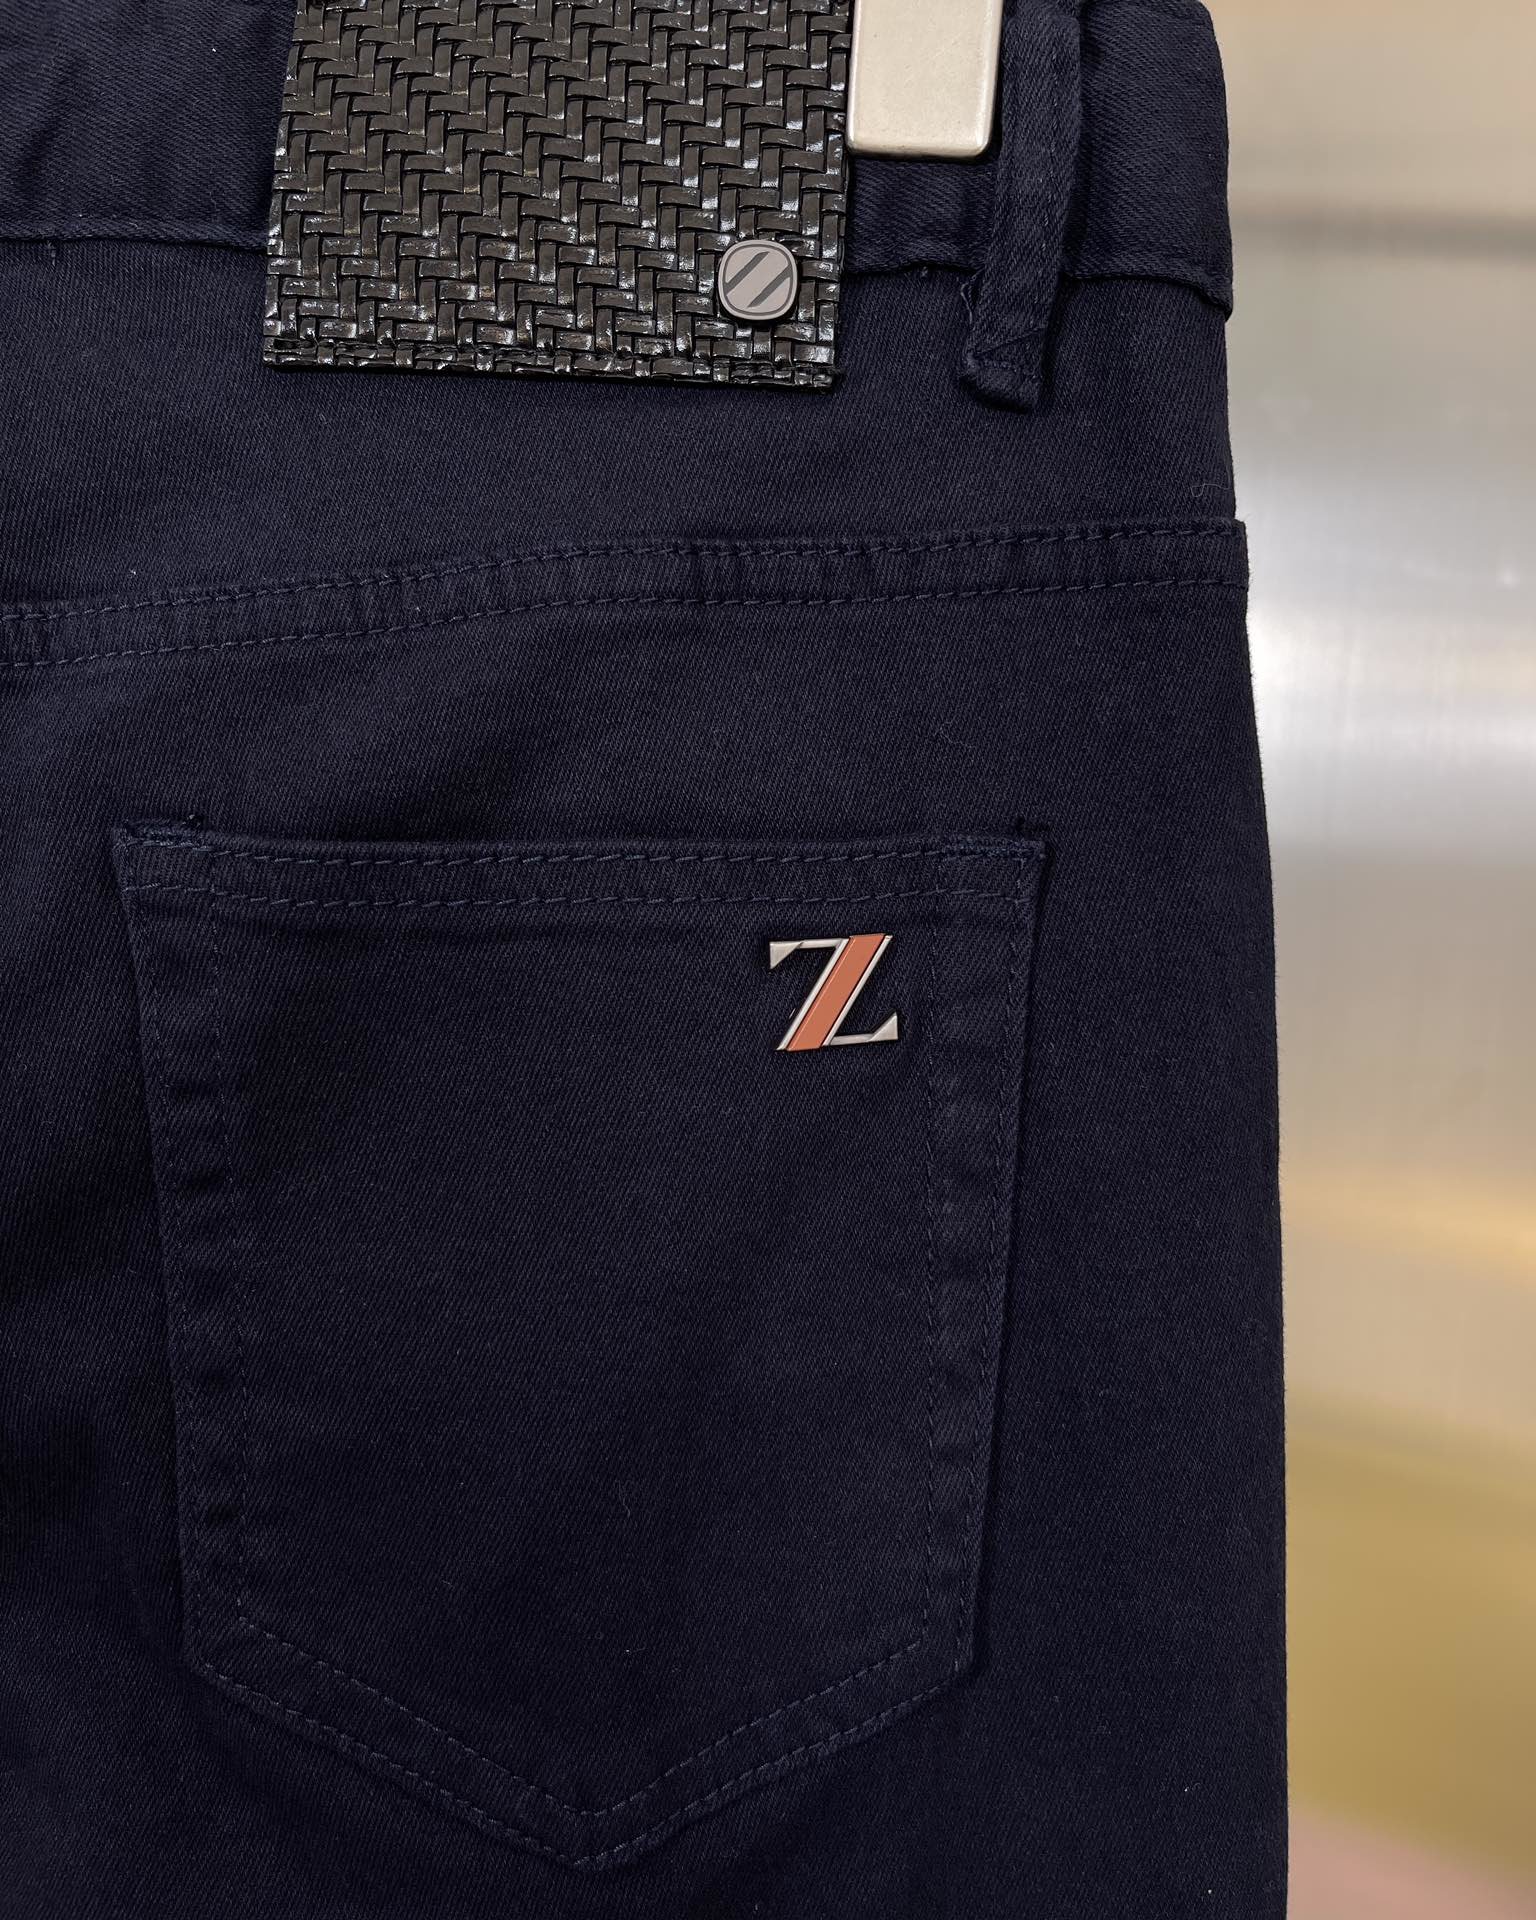 Zegna杰尼亚款式男款牛仔裤mensjeanssize29-38have35NO37立体裁剪好版型手感